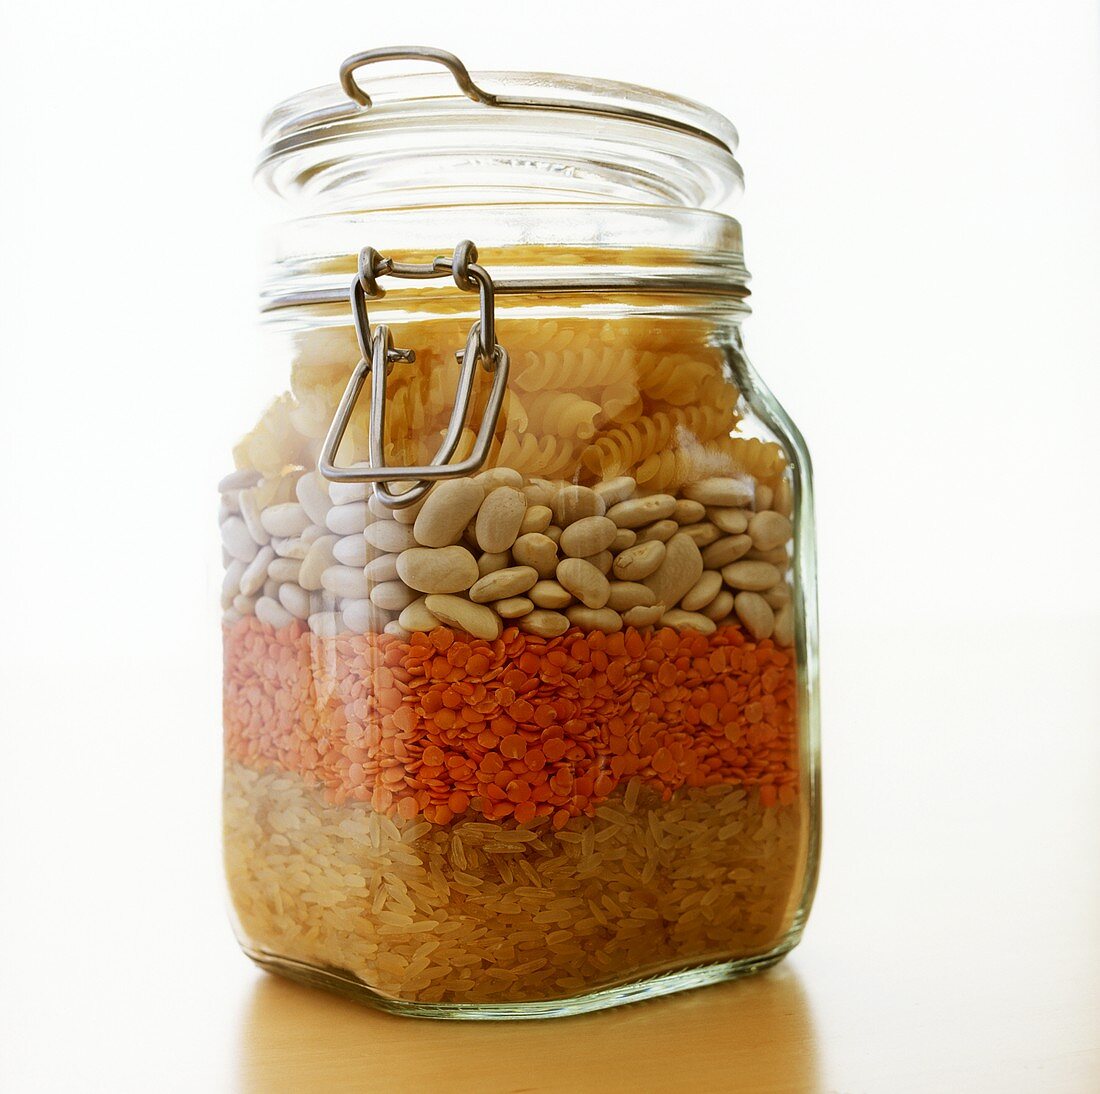 Rice, lentils, beans, pasta - in a storage jar